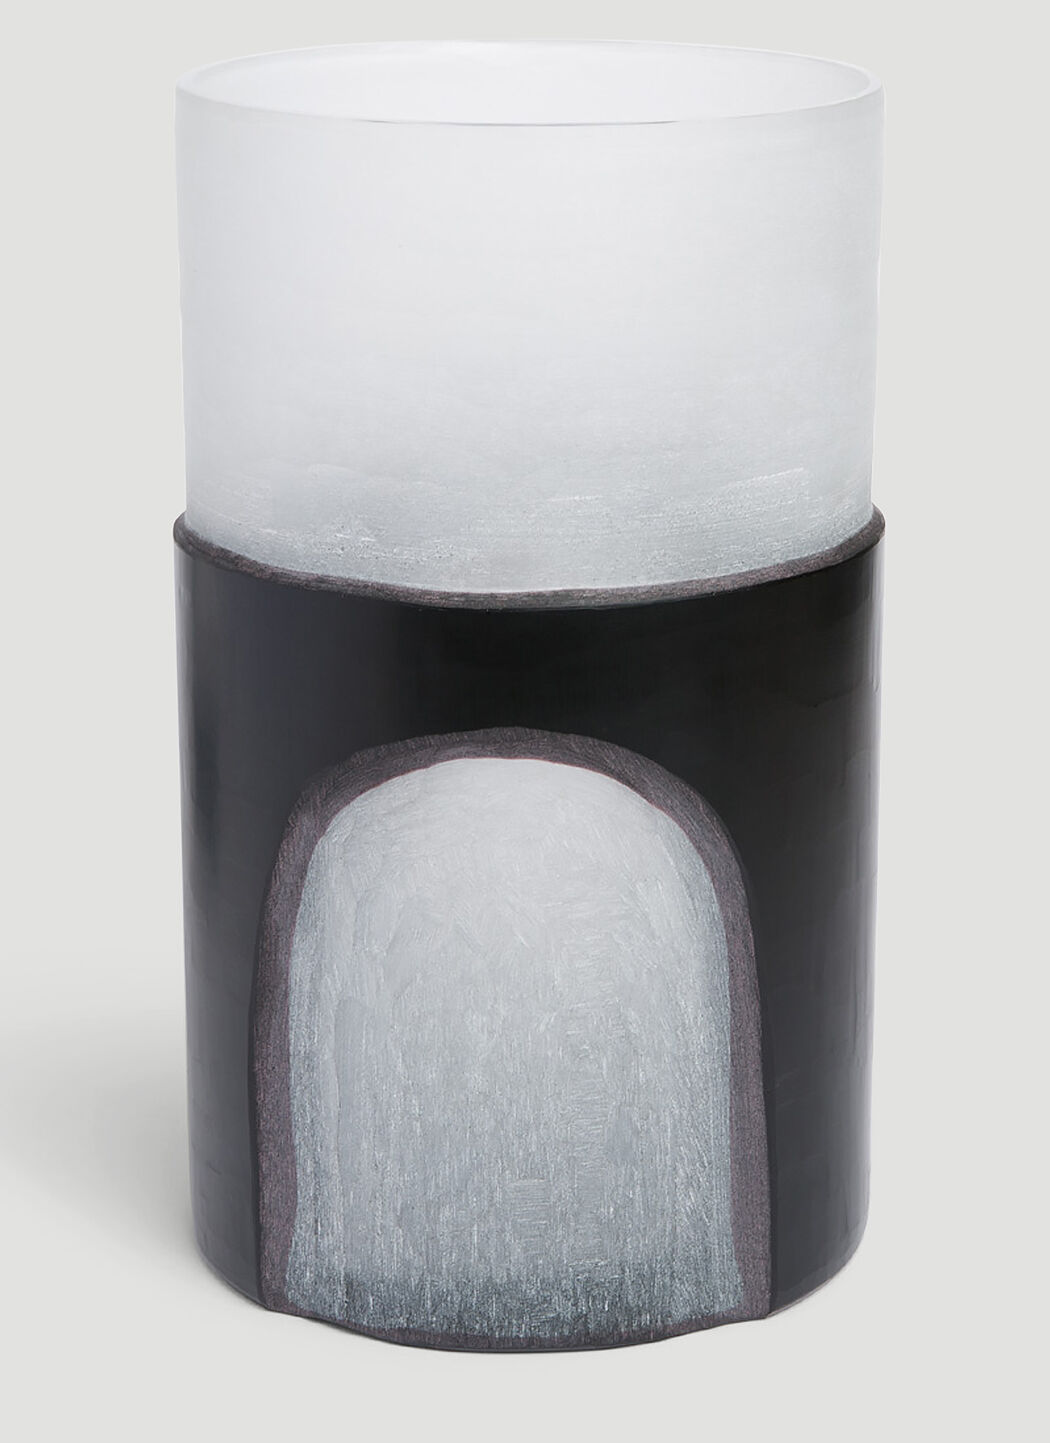 Marloe Marloe Medium Carved Vase クリーム rlo0351006